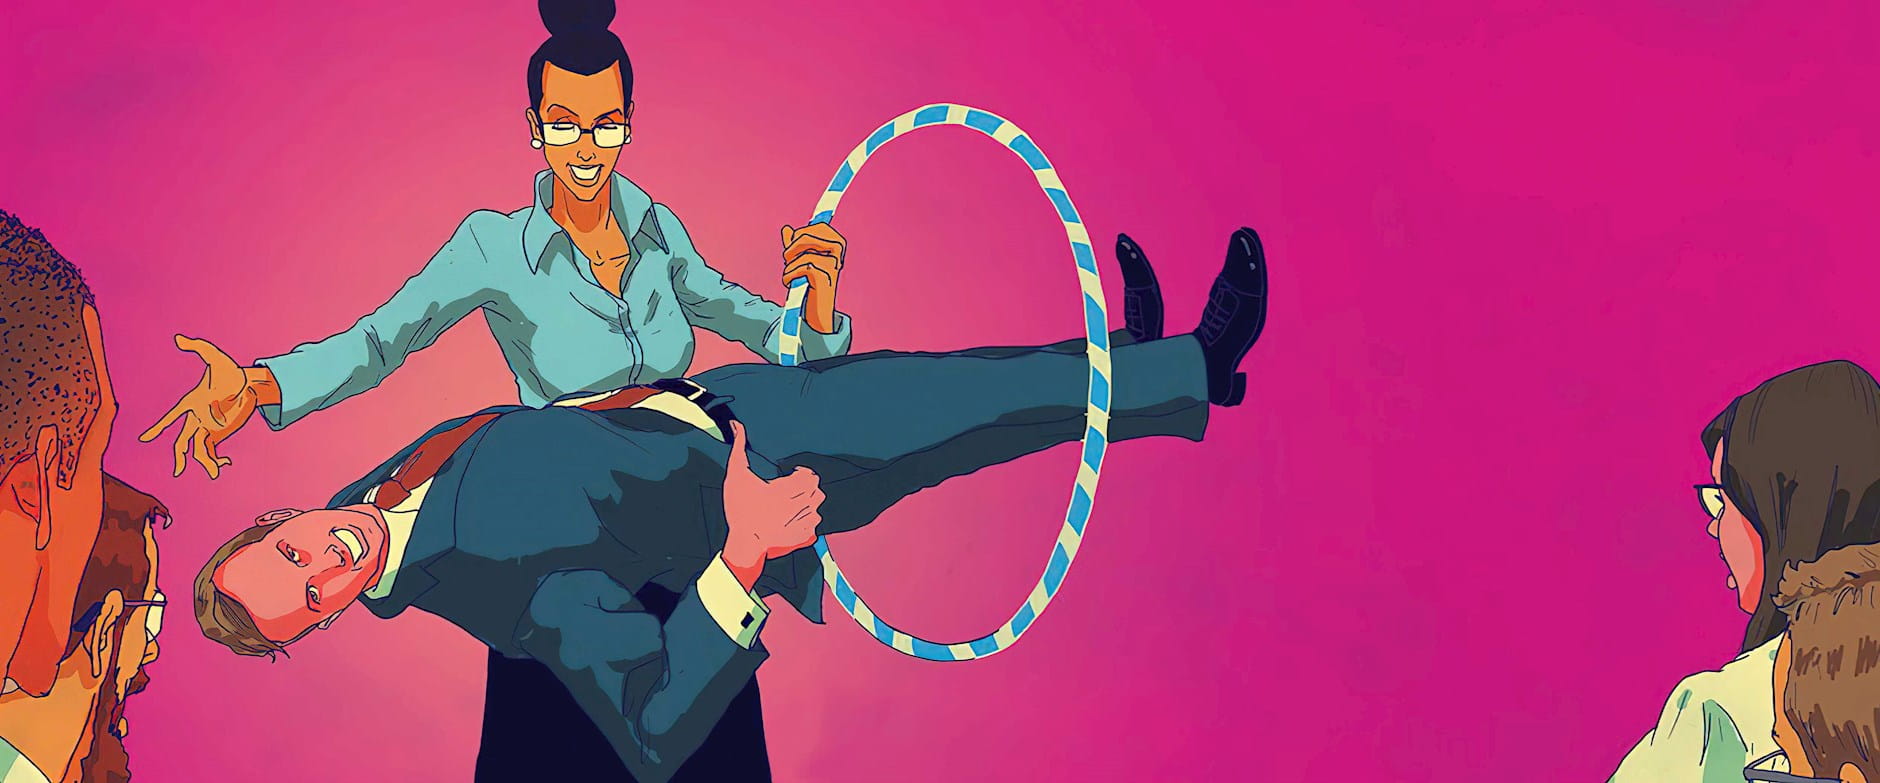 Illustration of businessman jumping through a hoop